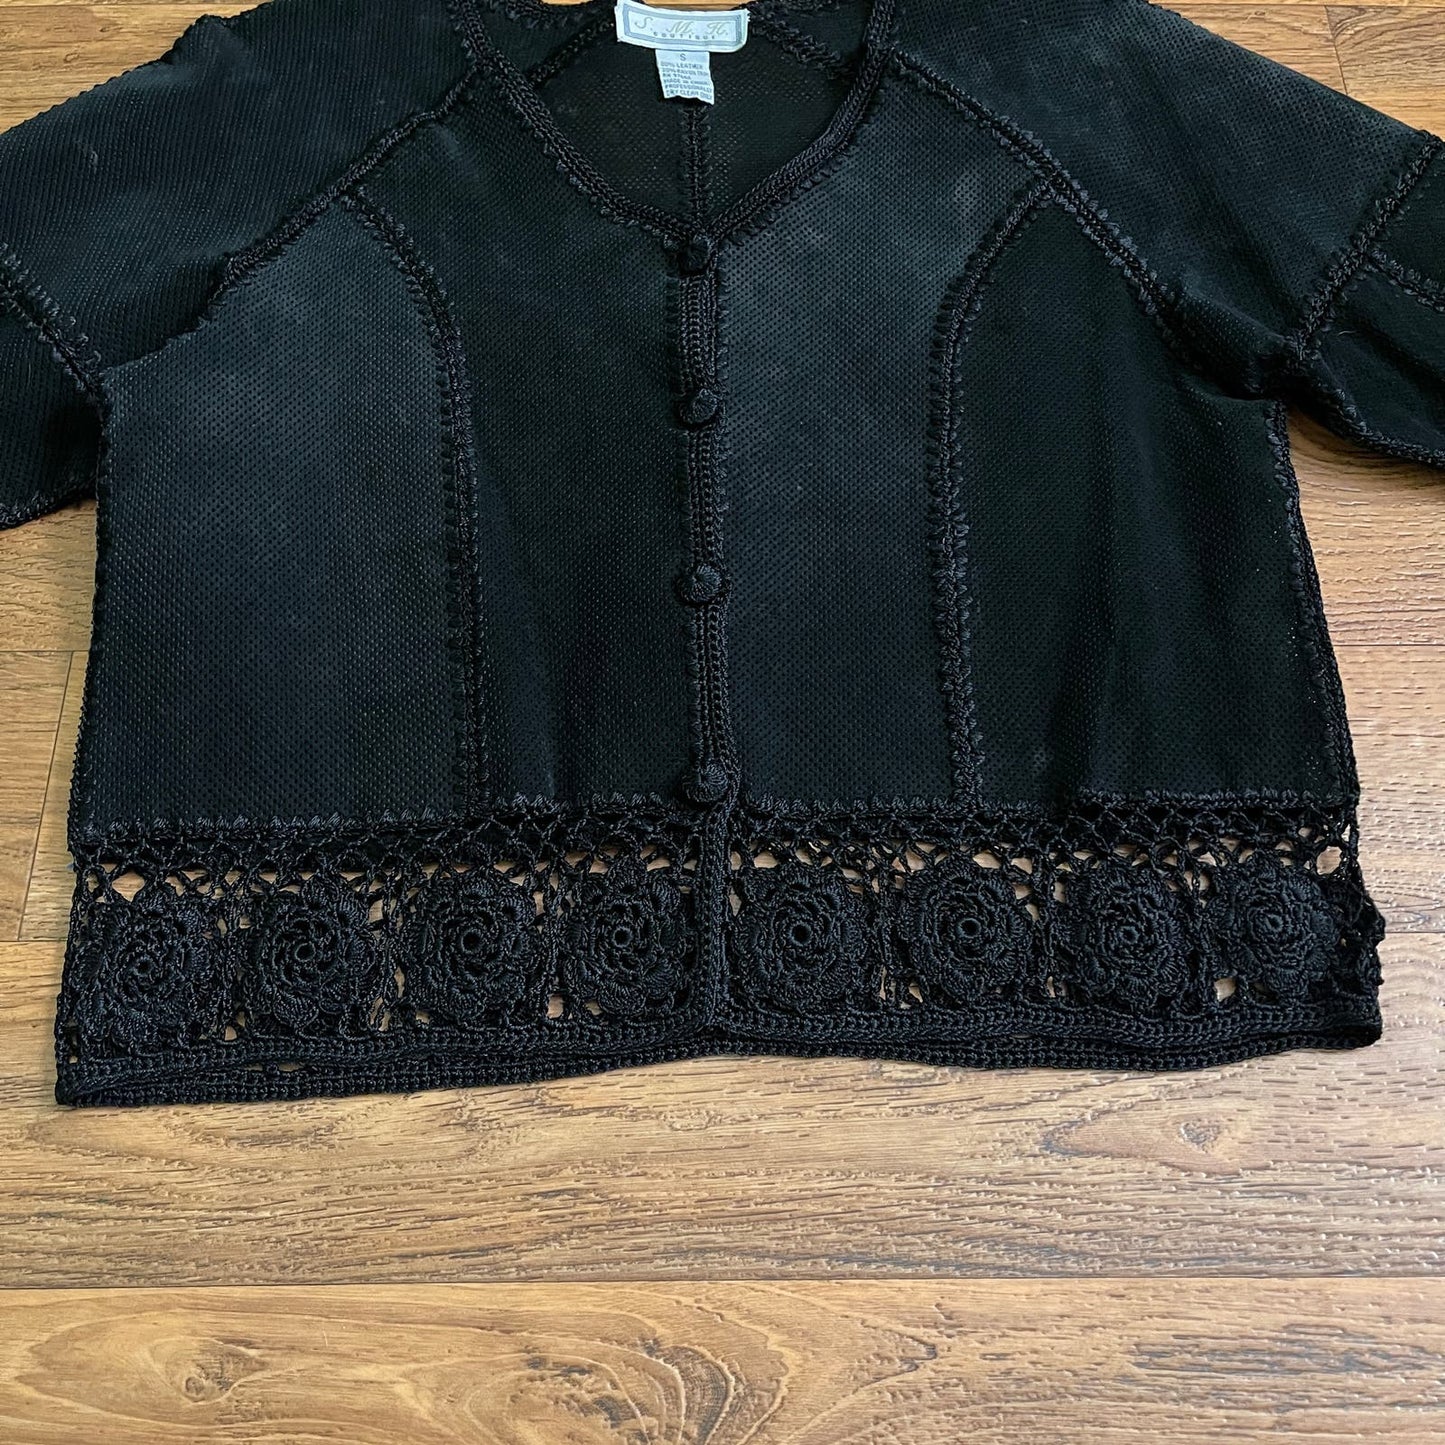 Vintage 90s Black Suede Leather Jacket or Shirt with Floral Crochet Details S